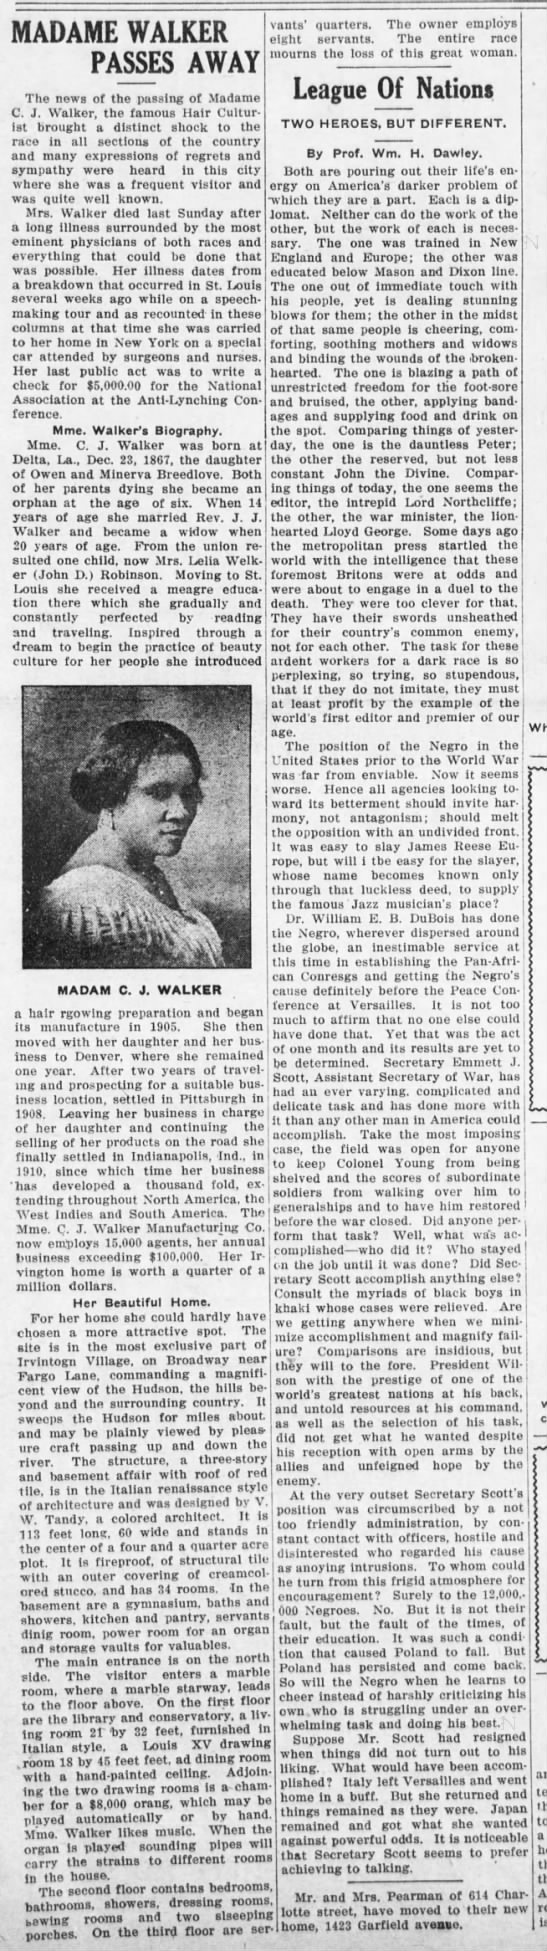 Kansas City Sun obituary for Madam C.J. Walker and description of her New York home, Villa Lewaro - 